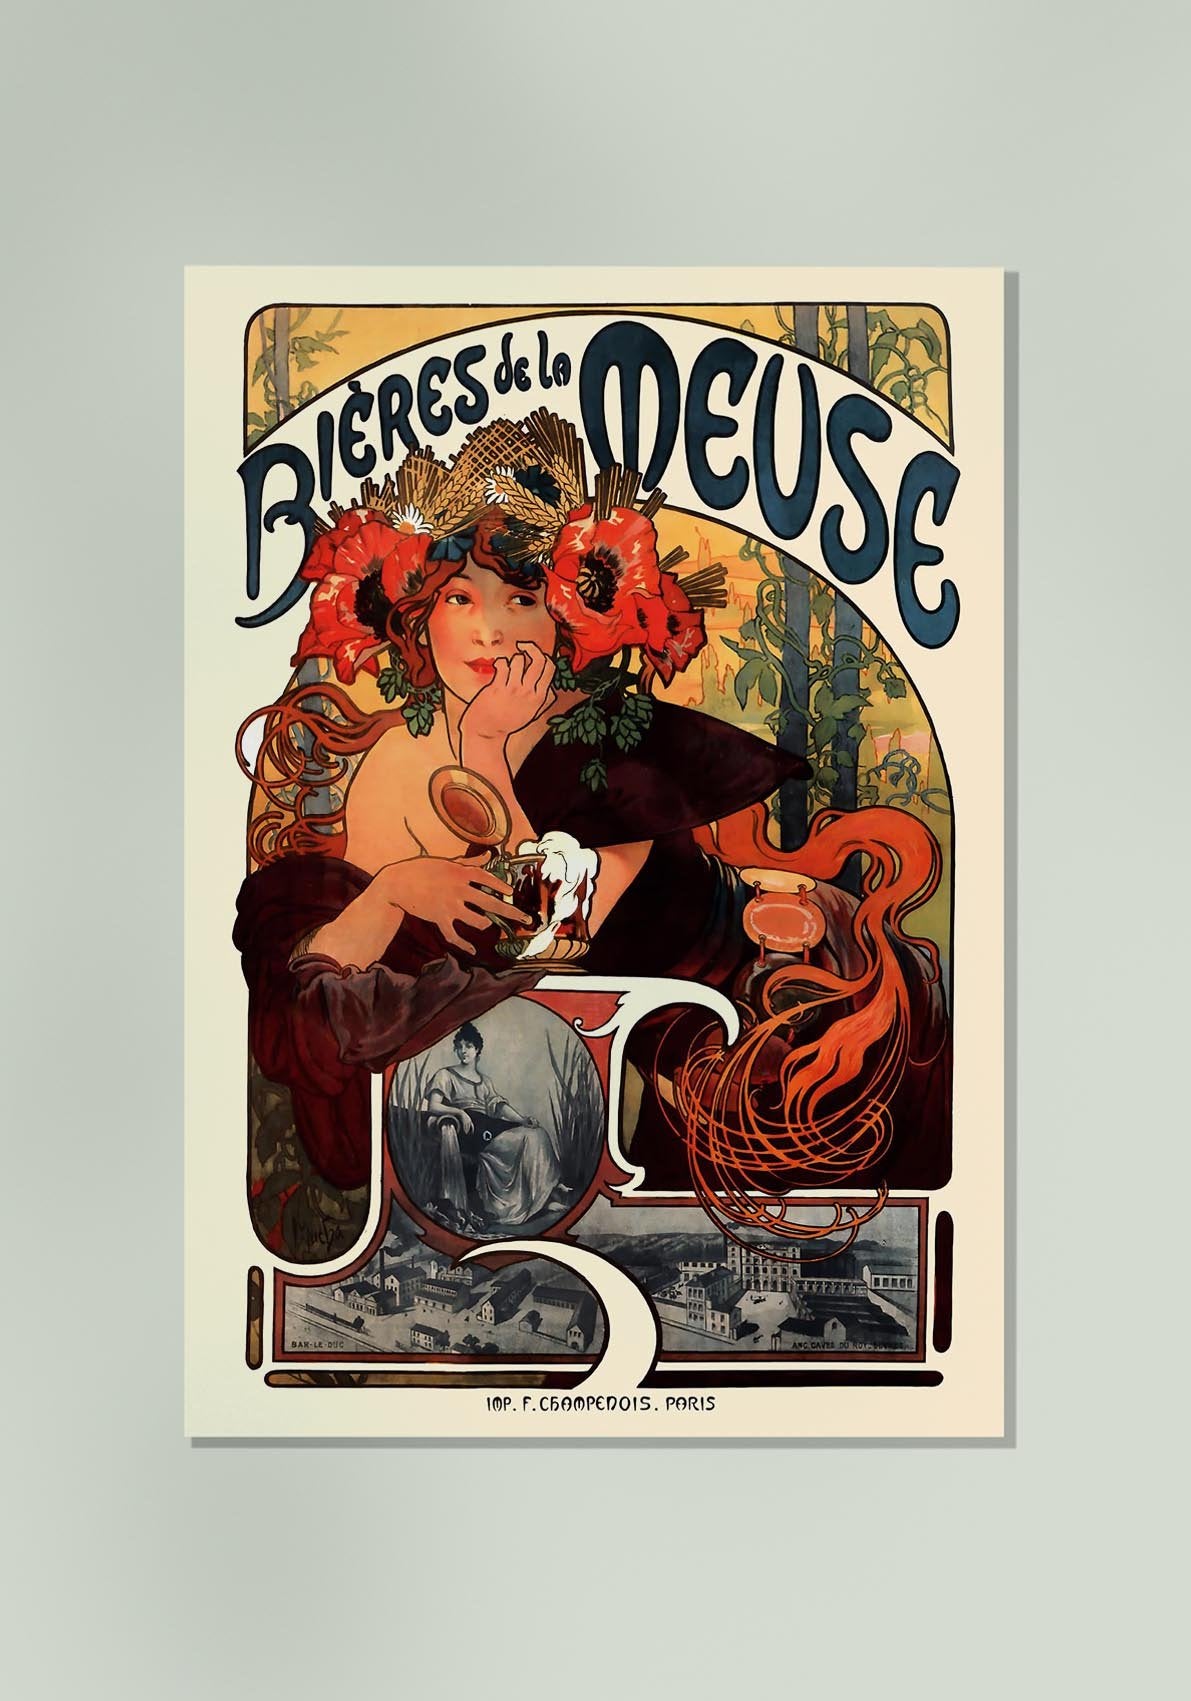 Bieres de la Meuse by Alphonse Mucha